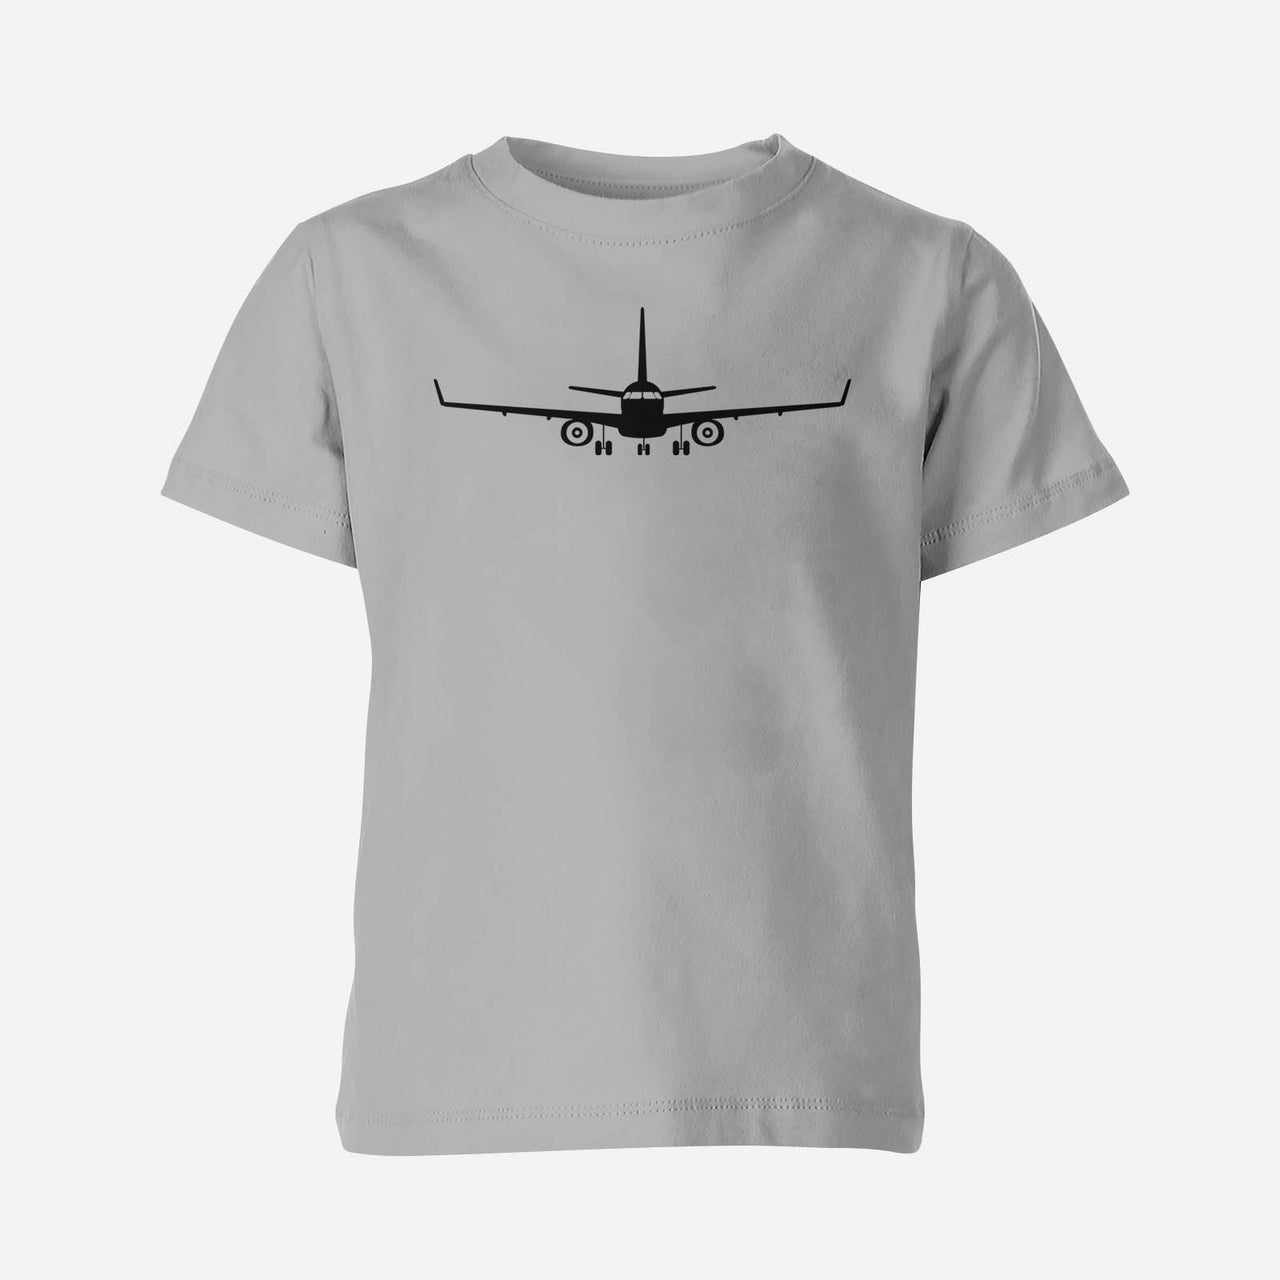 Embraer E-190 Silhouette Designed Children T-Shirts